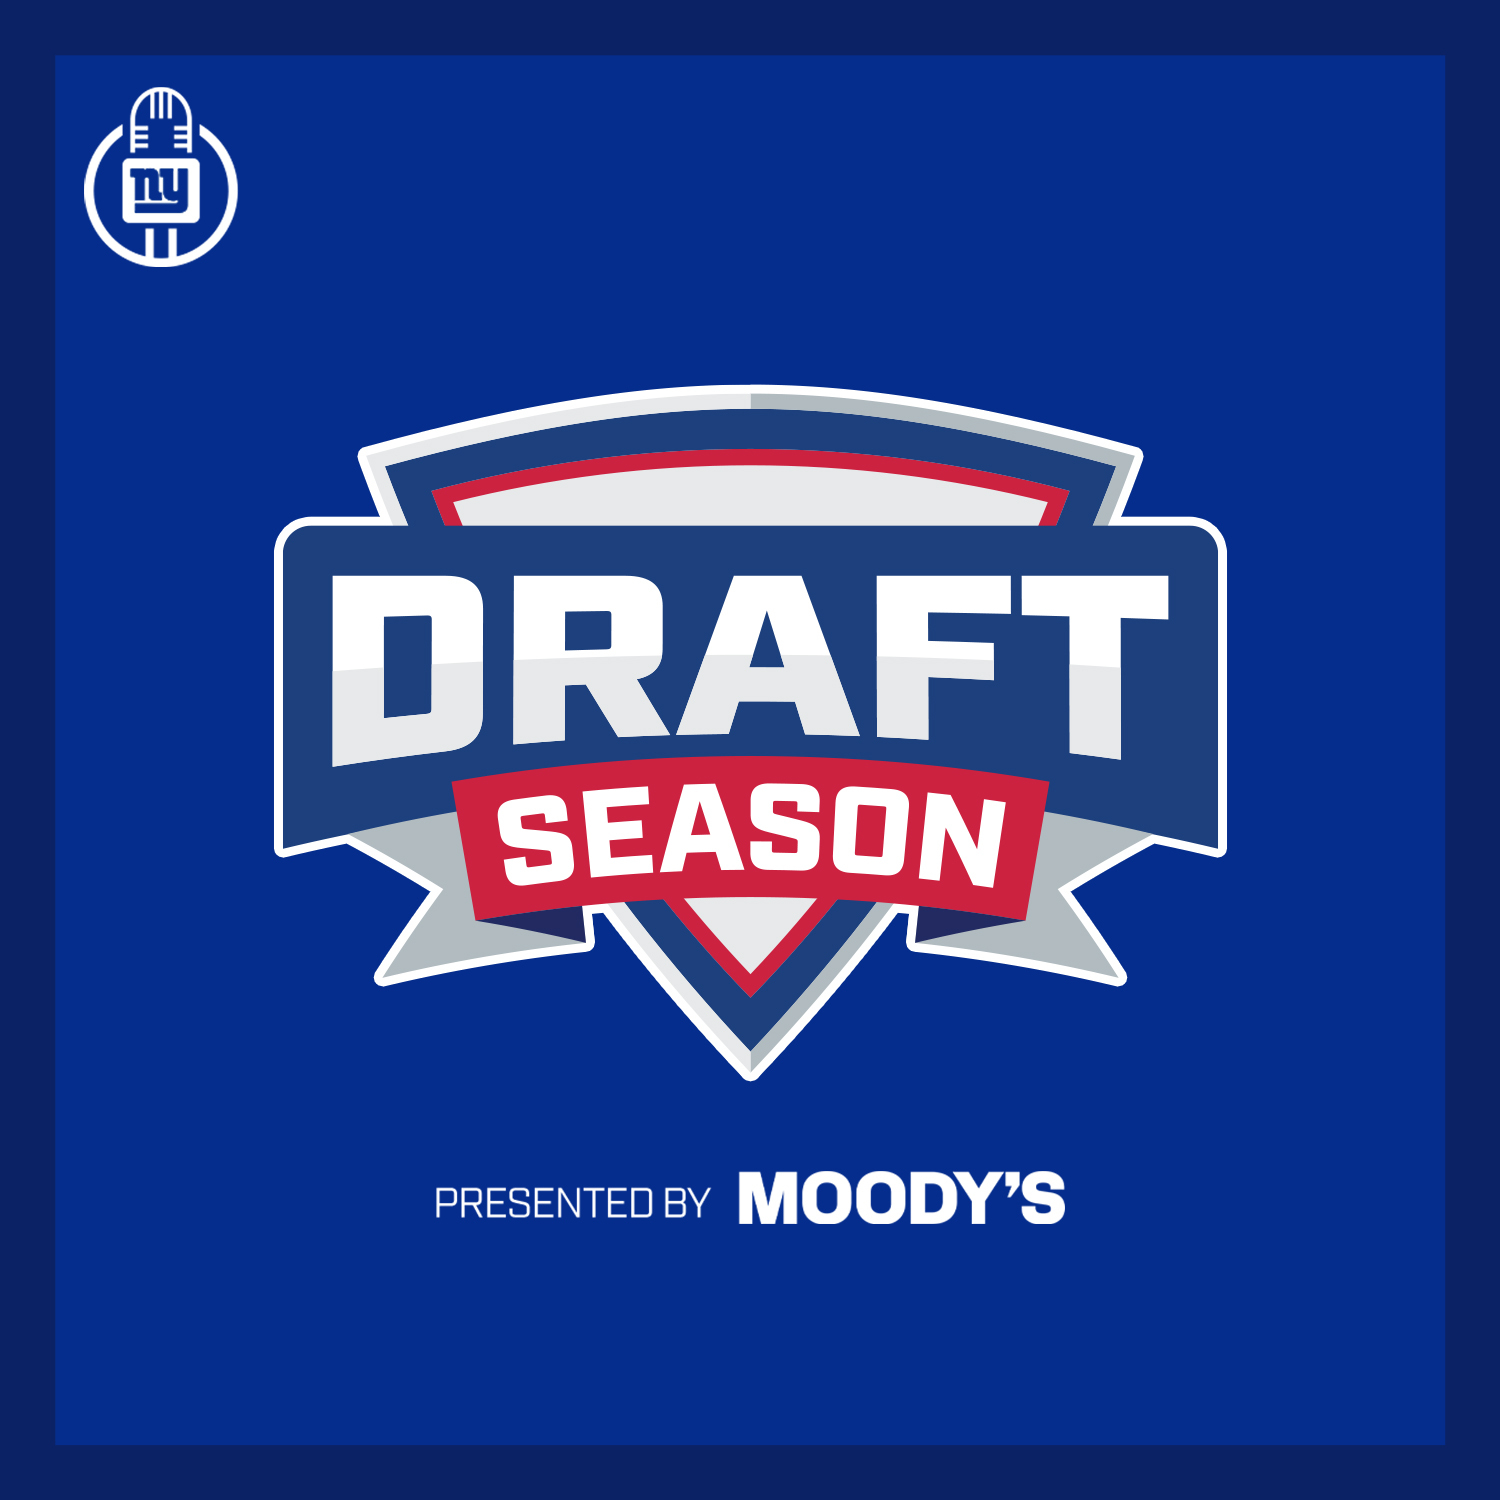 Draft Season | National Championship and NFL Draft Order